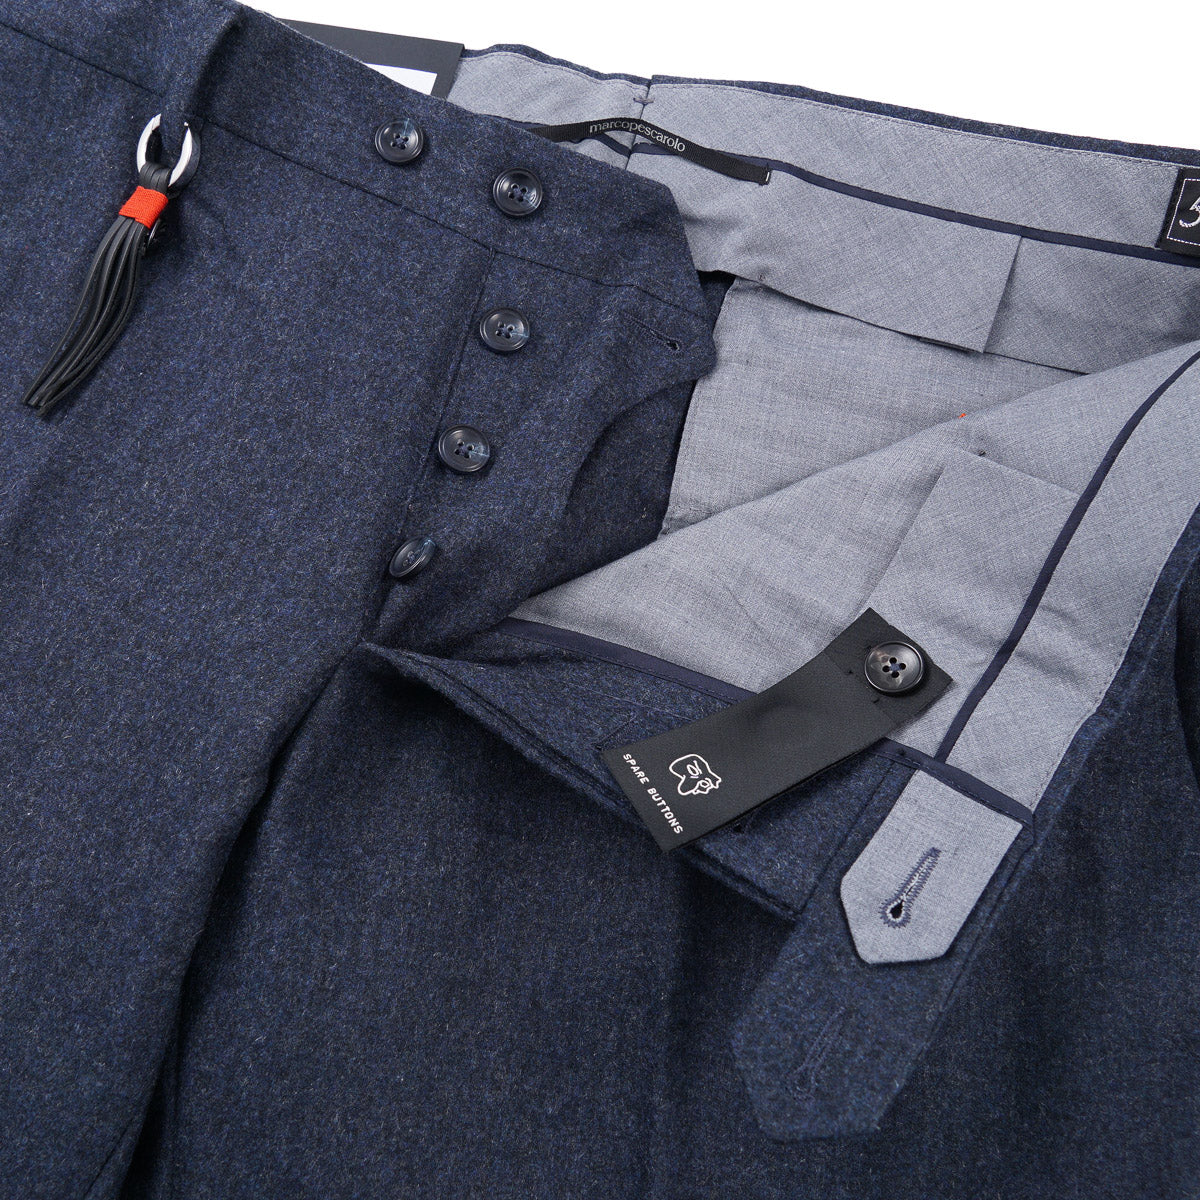 Marco Pescarolo Soft Wool-Cashmere Pants - Top Shelf Apparel